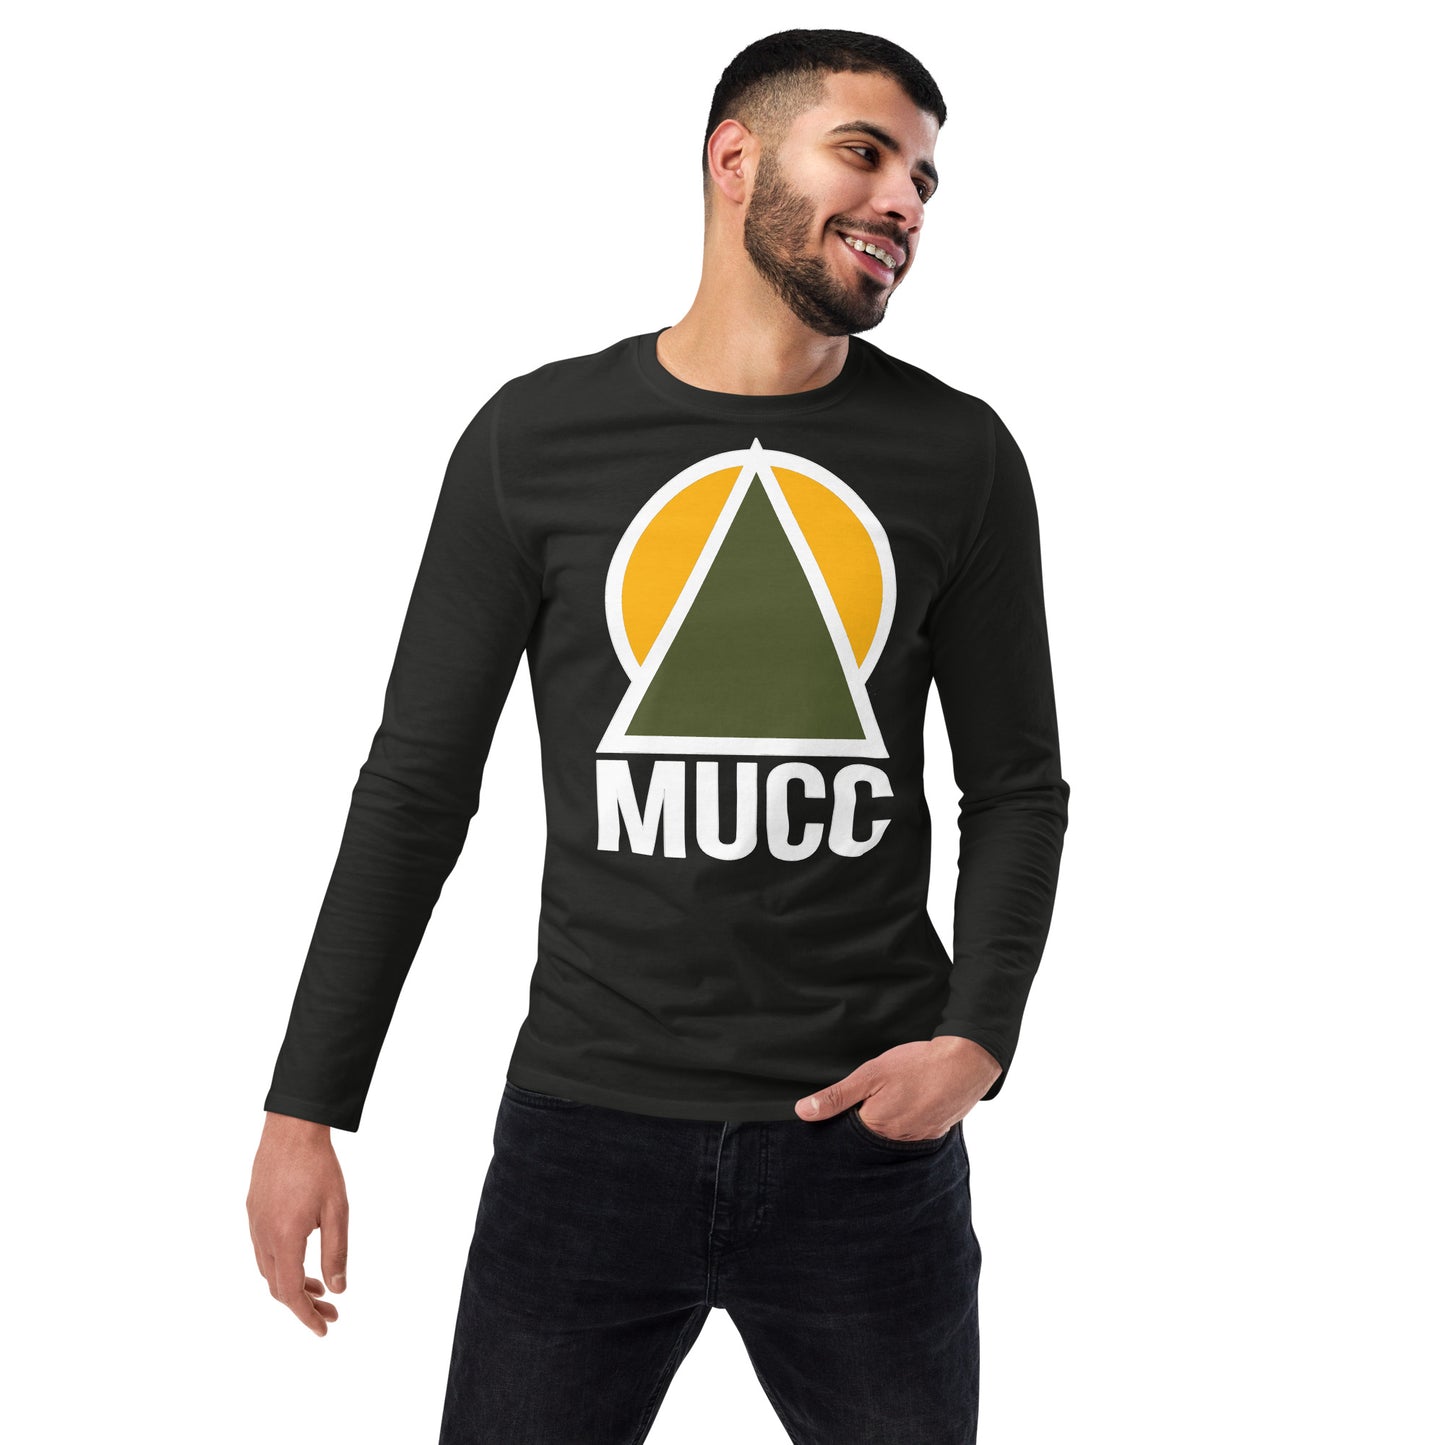 Unisex MUCC long sleeve shirt